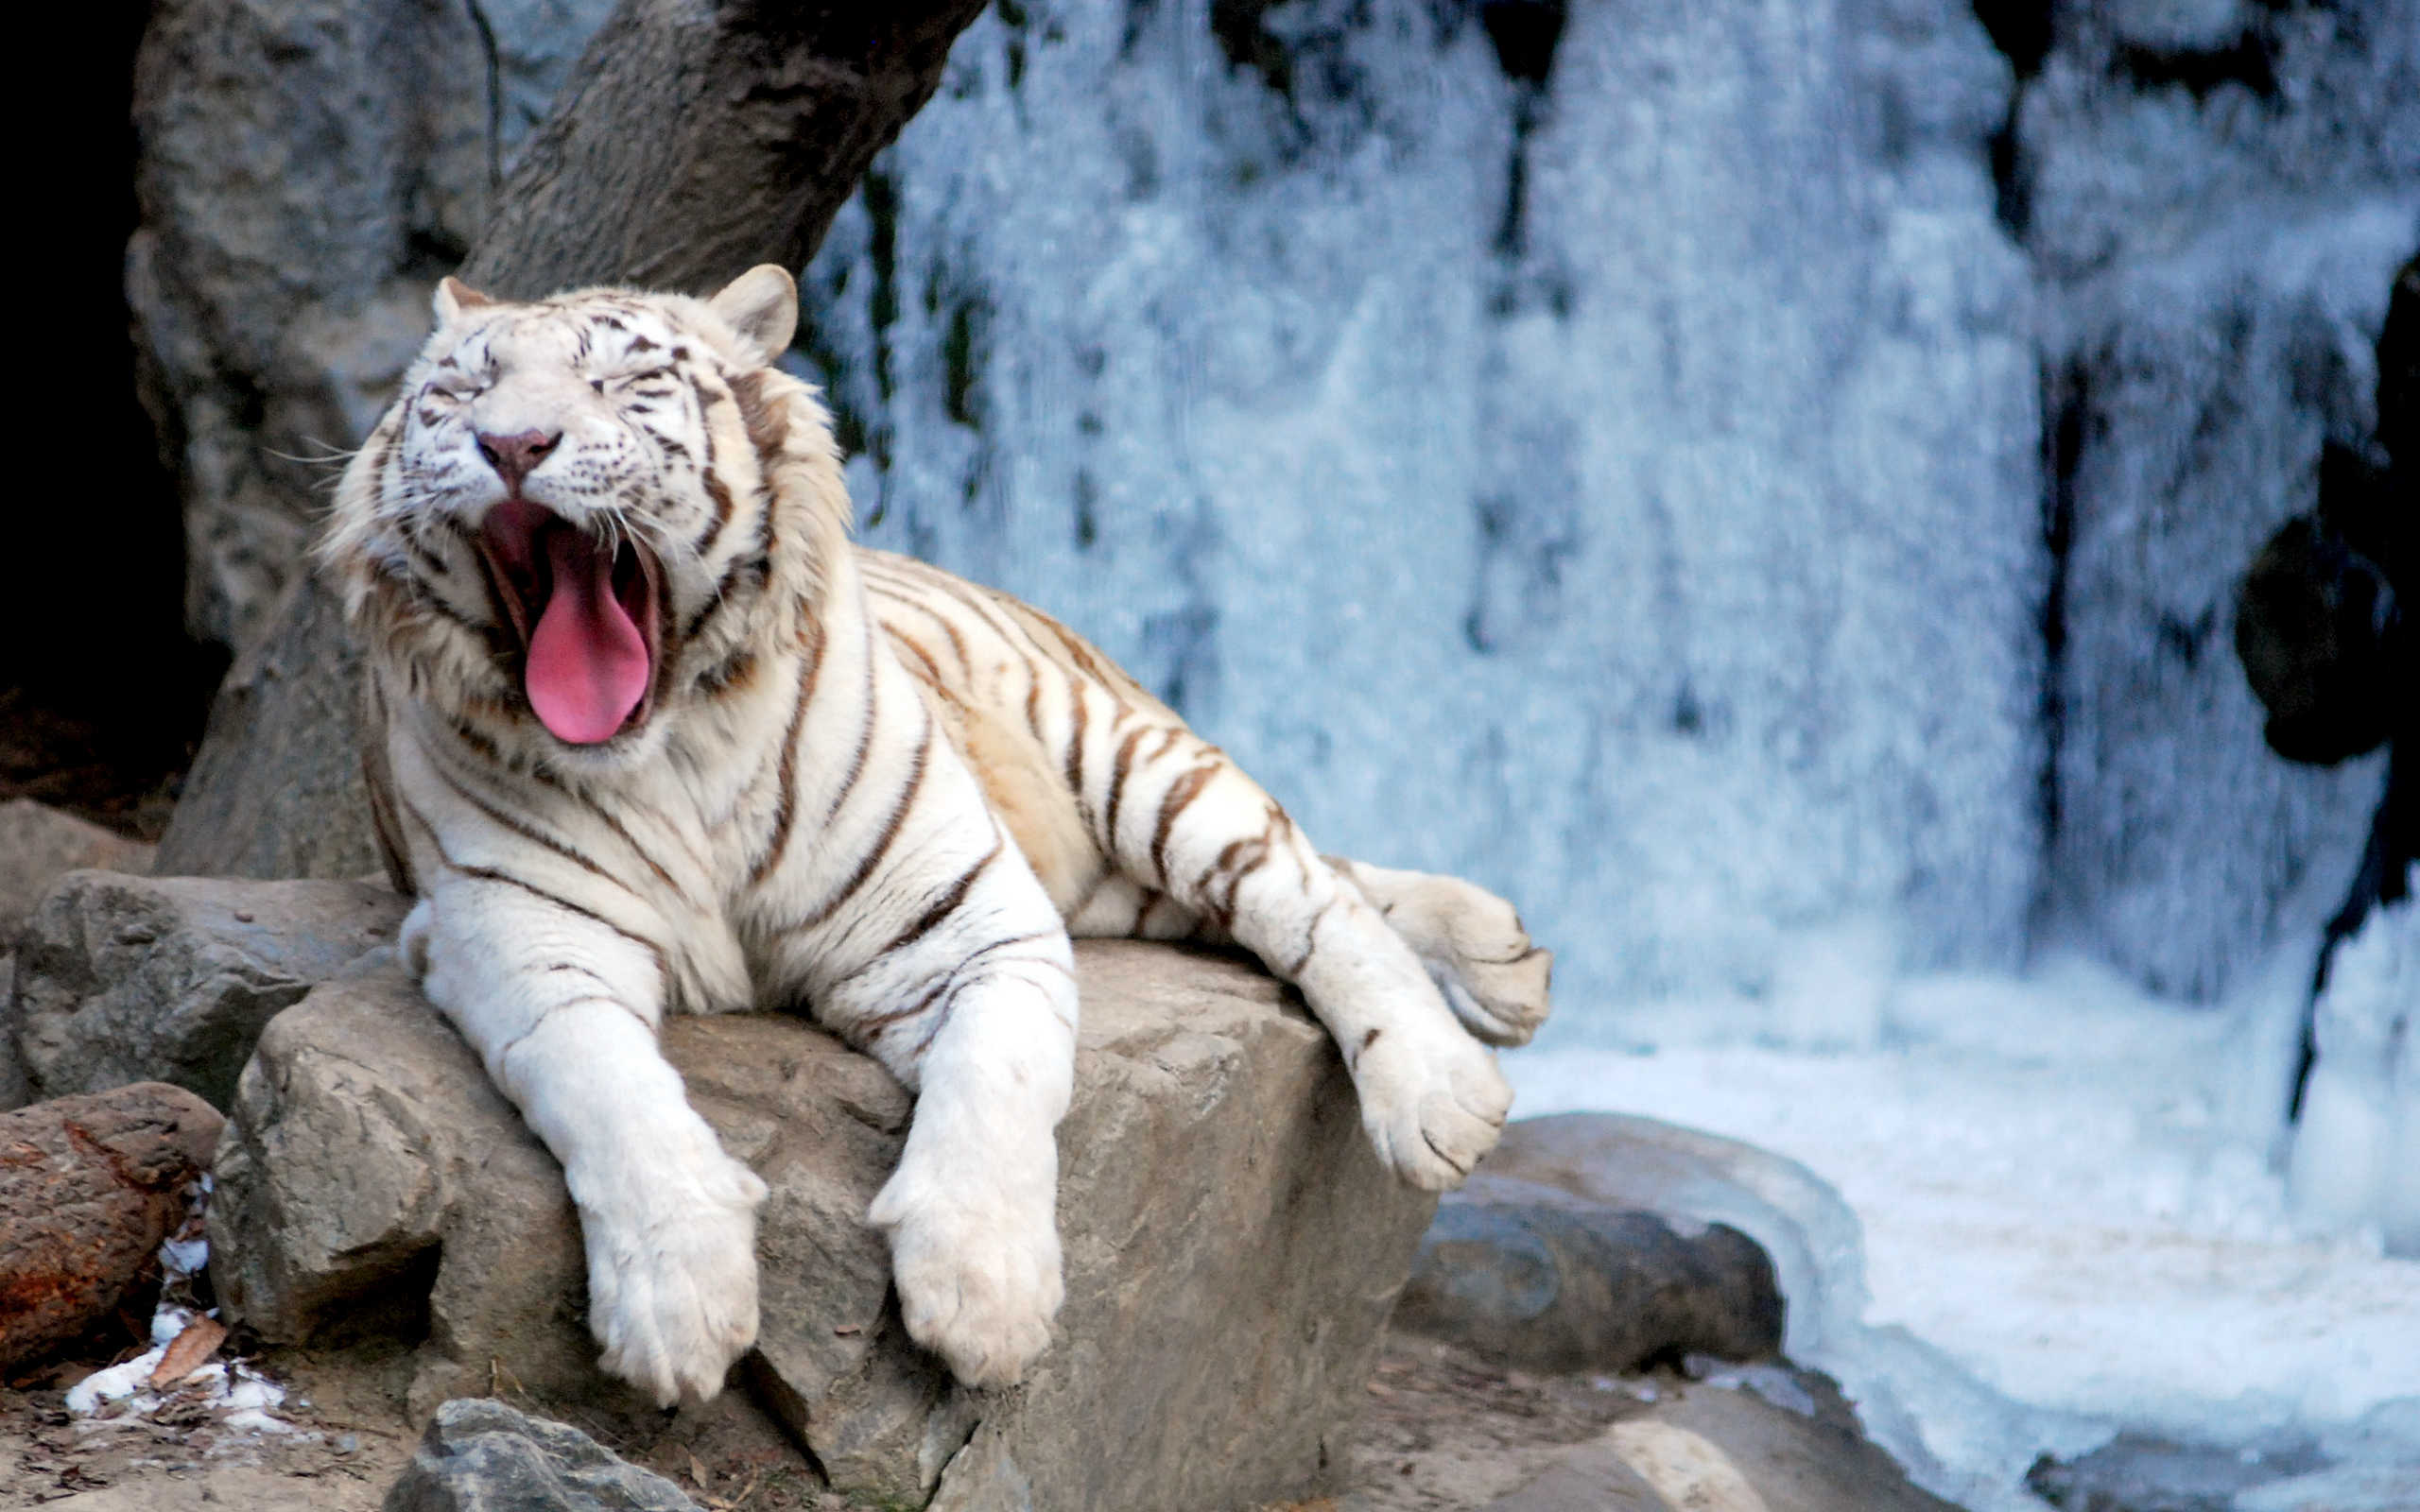 water, cats, animals, tigers, rocks, tongue, yawns - desktop wallpaper